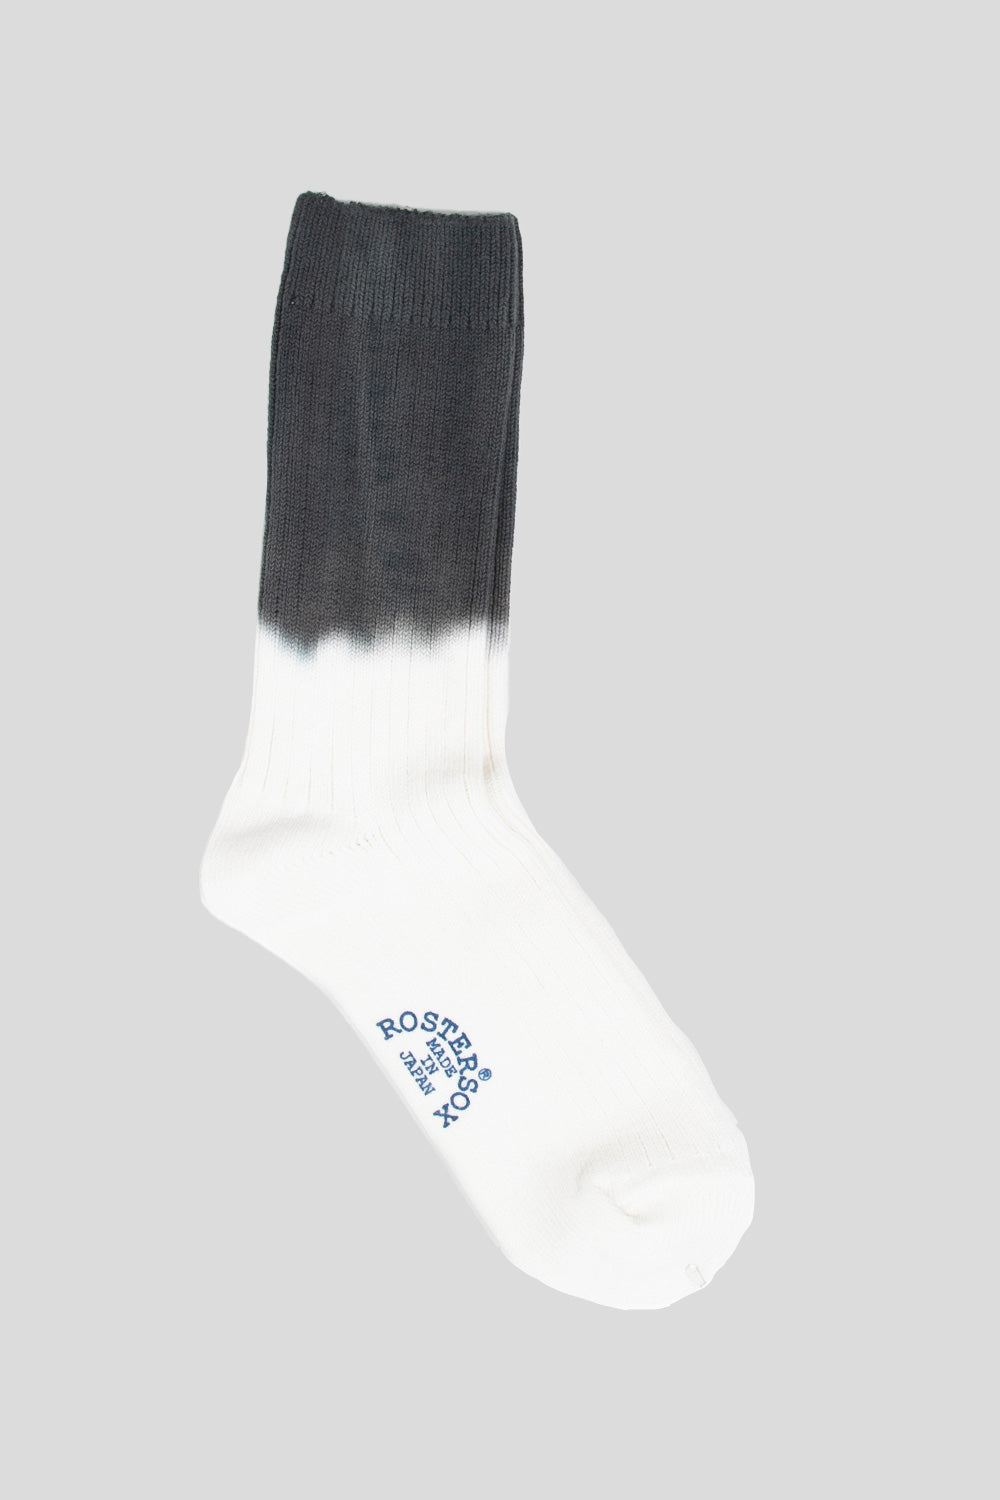 Rostersox HRD Rib Socks in Black